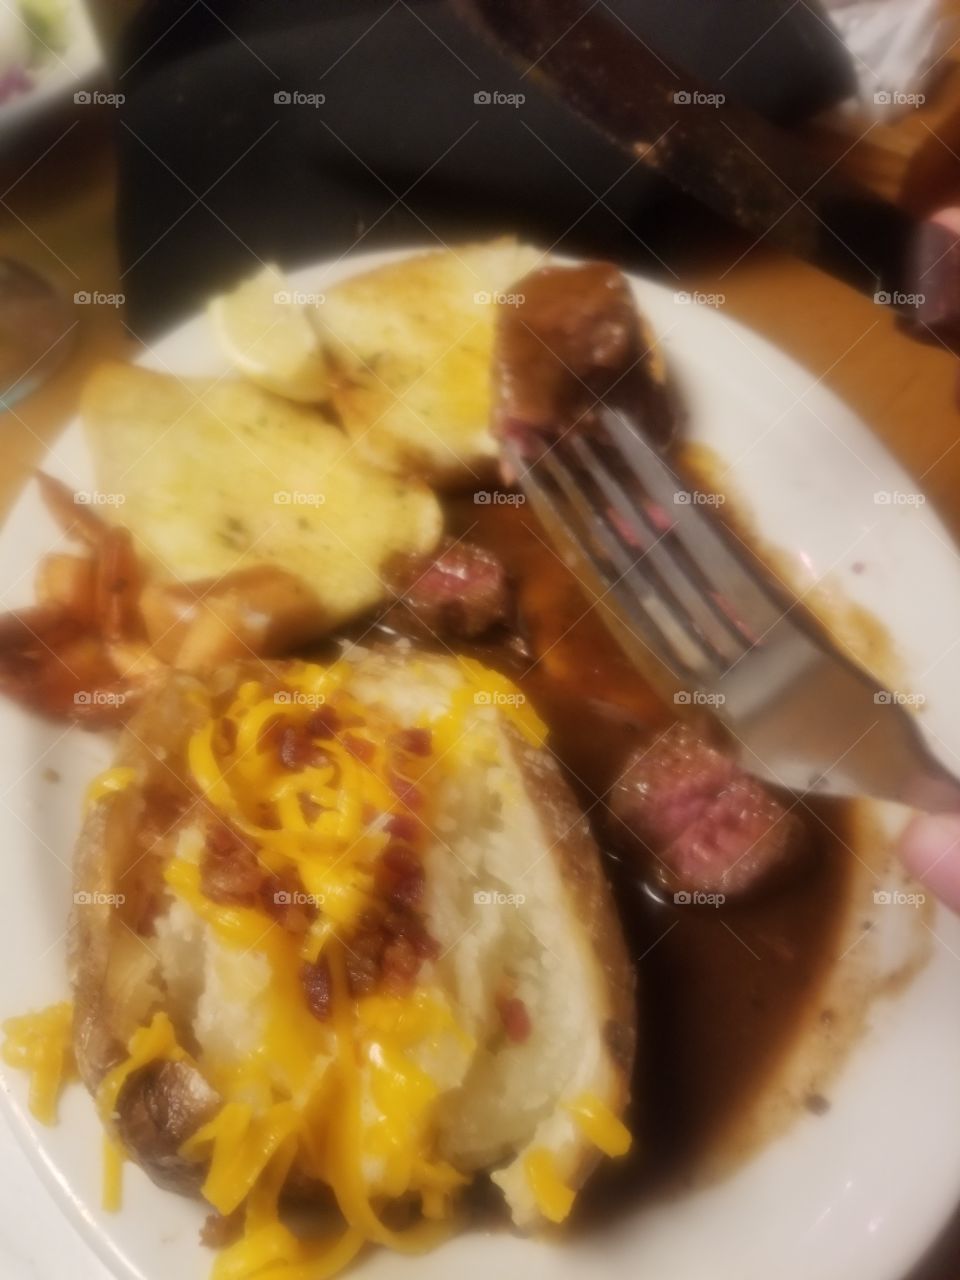 Steak and baked potato